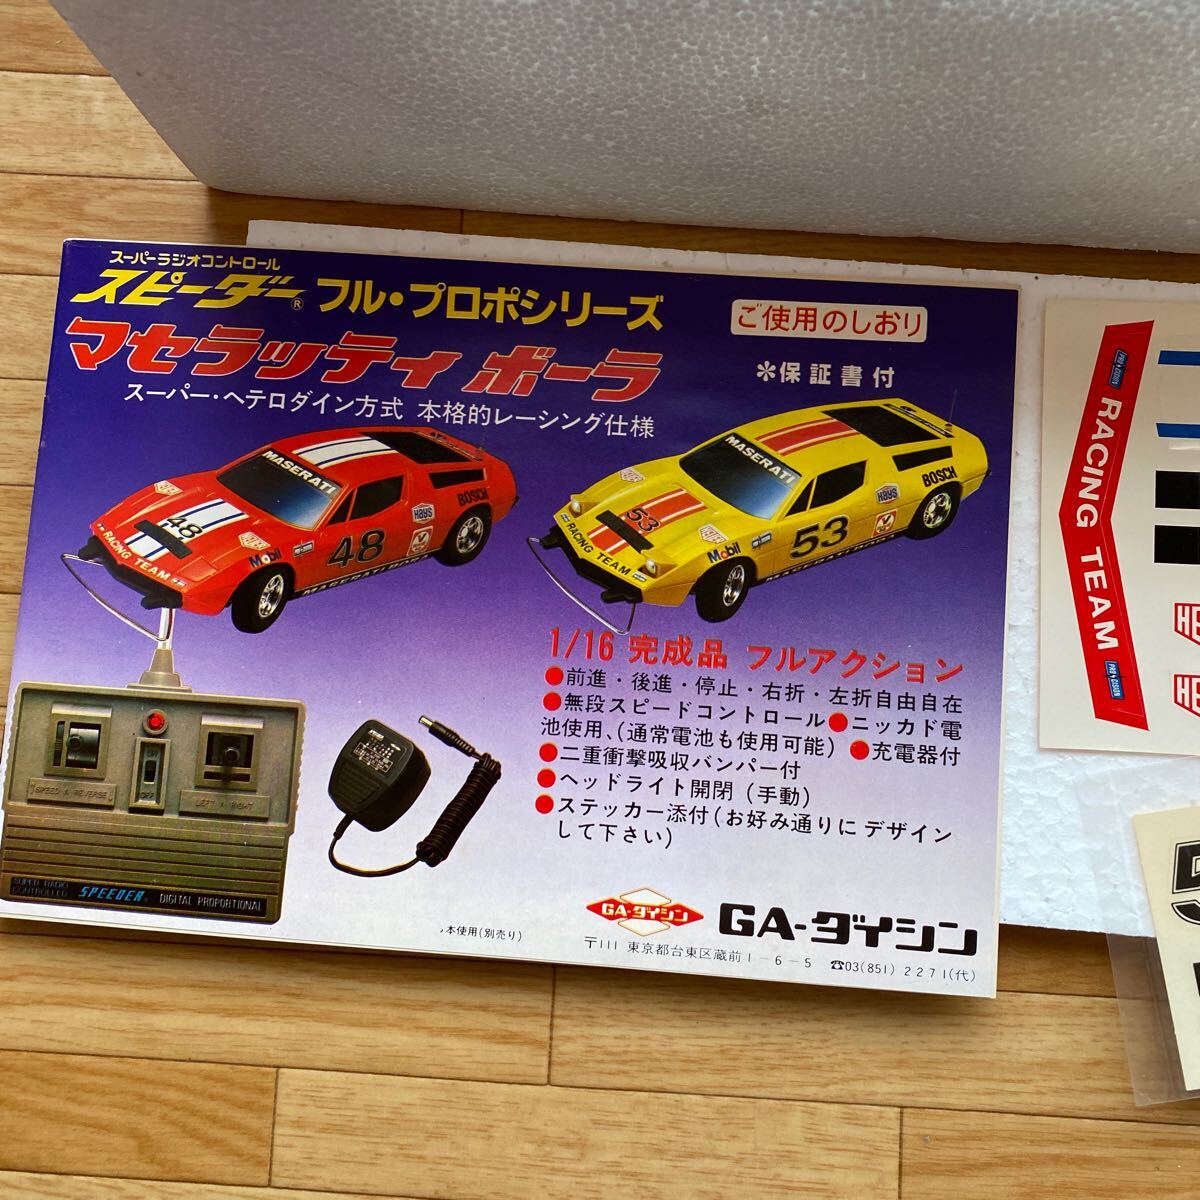  Showa Retro радиоконтроллер 1/16 Maserati Borer утиль стоимость доставки 1000 иен 